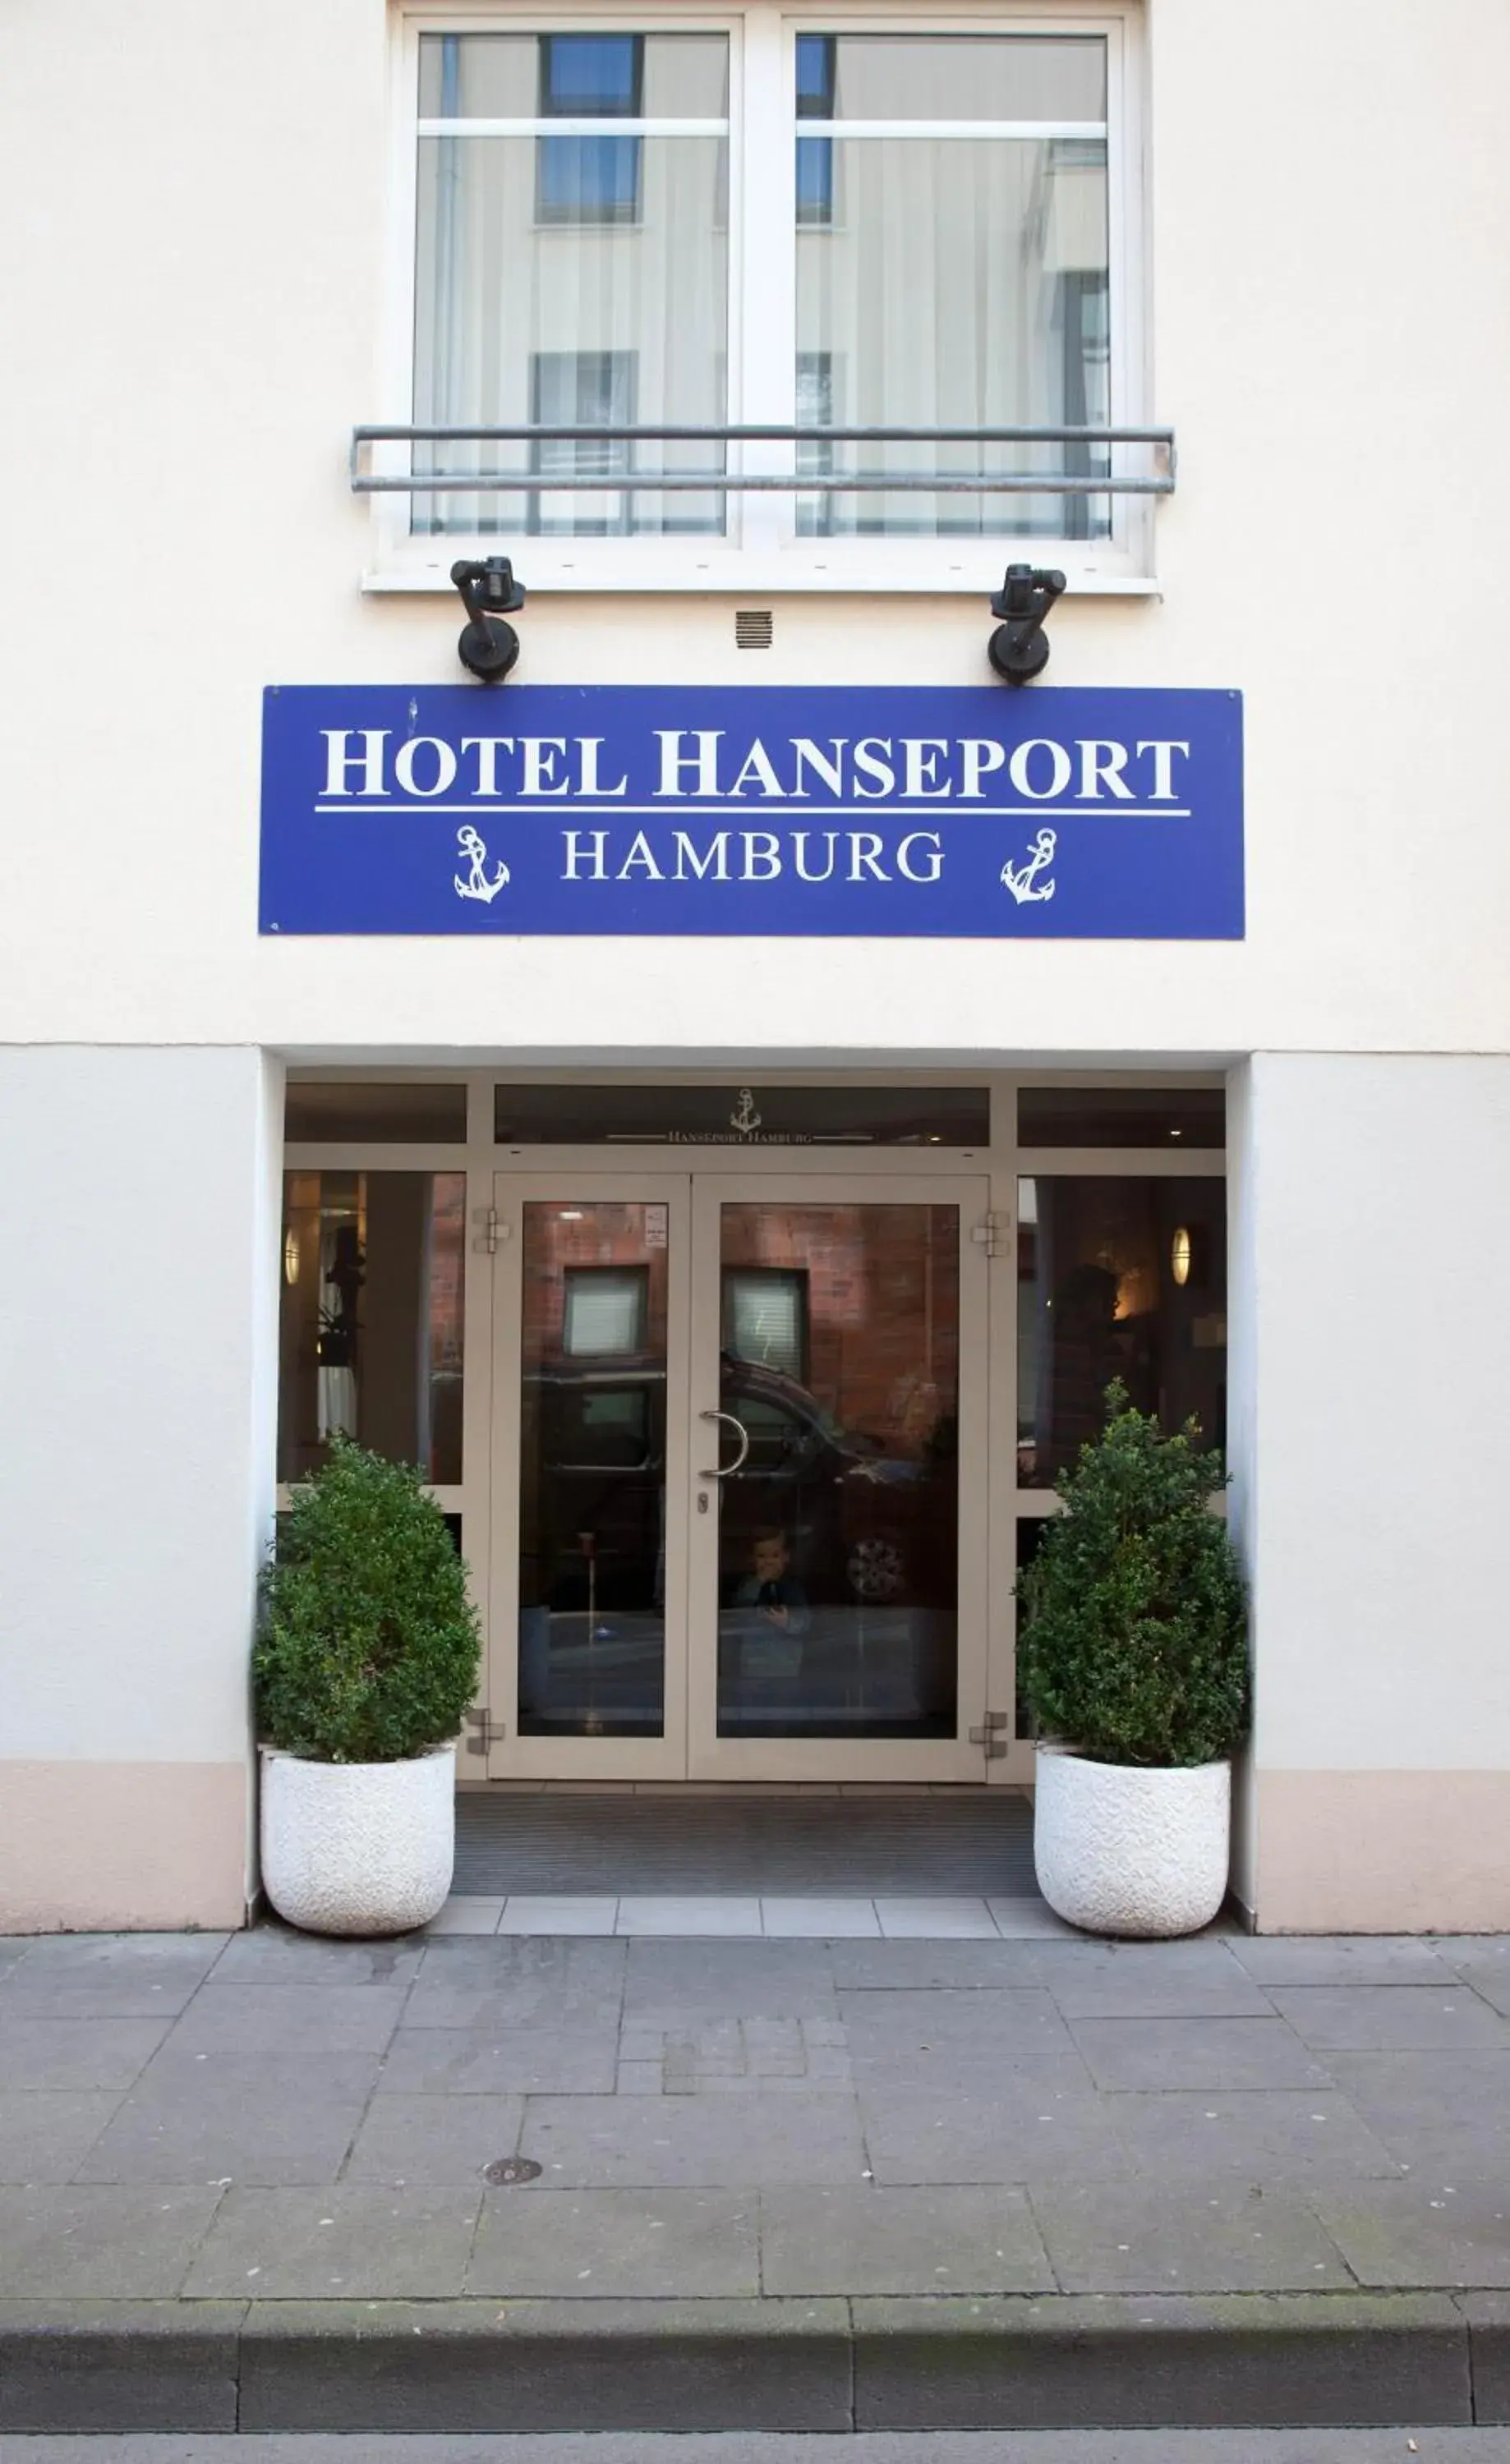 Property logo or sign in Hotel Hanseport Hamburg